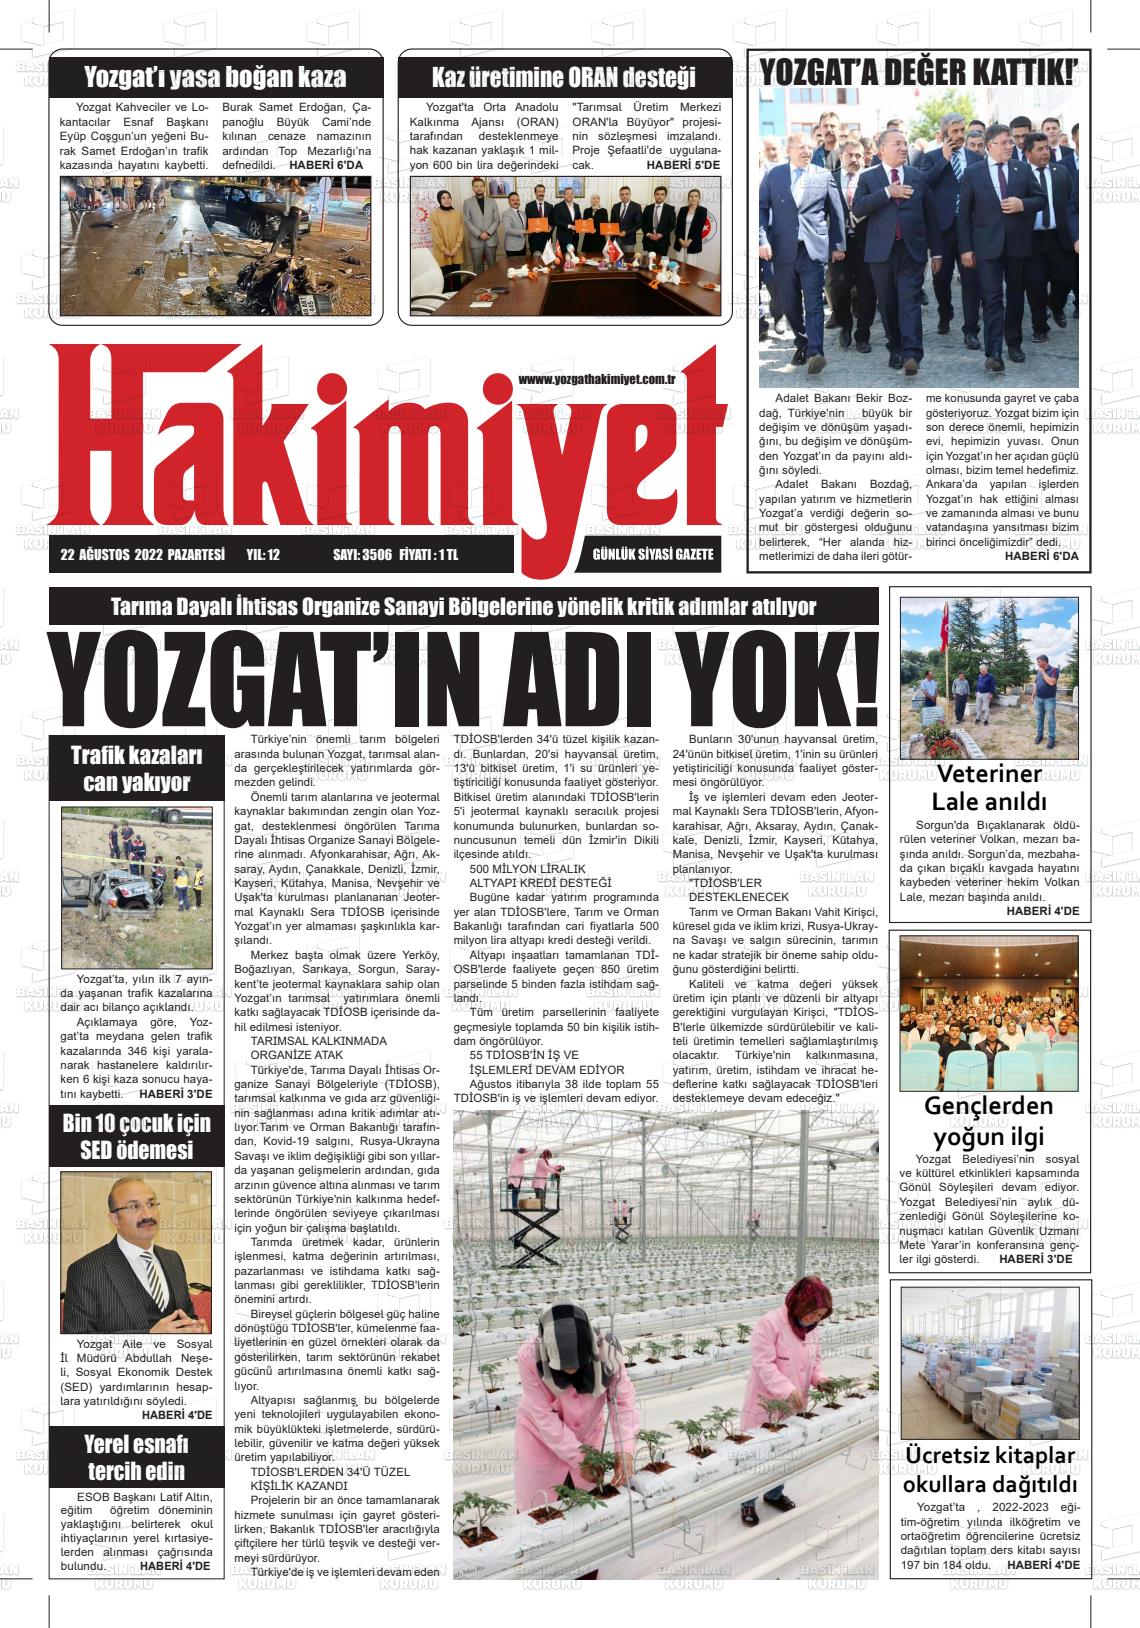 22 Ağustos 2022 Yozgat Hakimiyet Gazete Manşeti